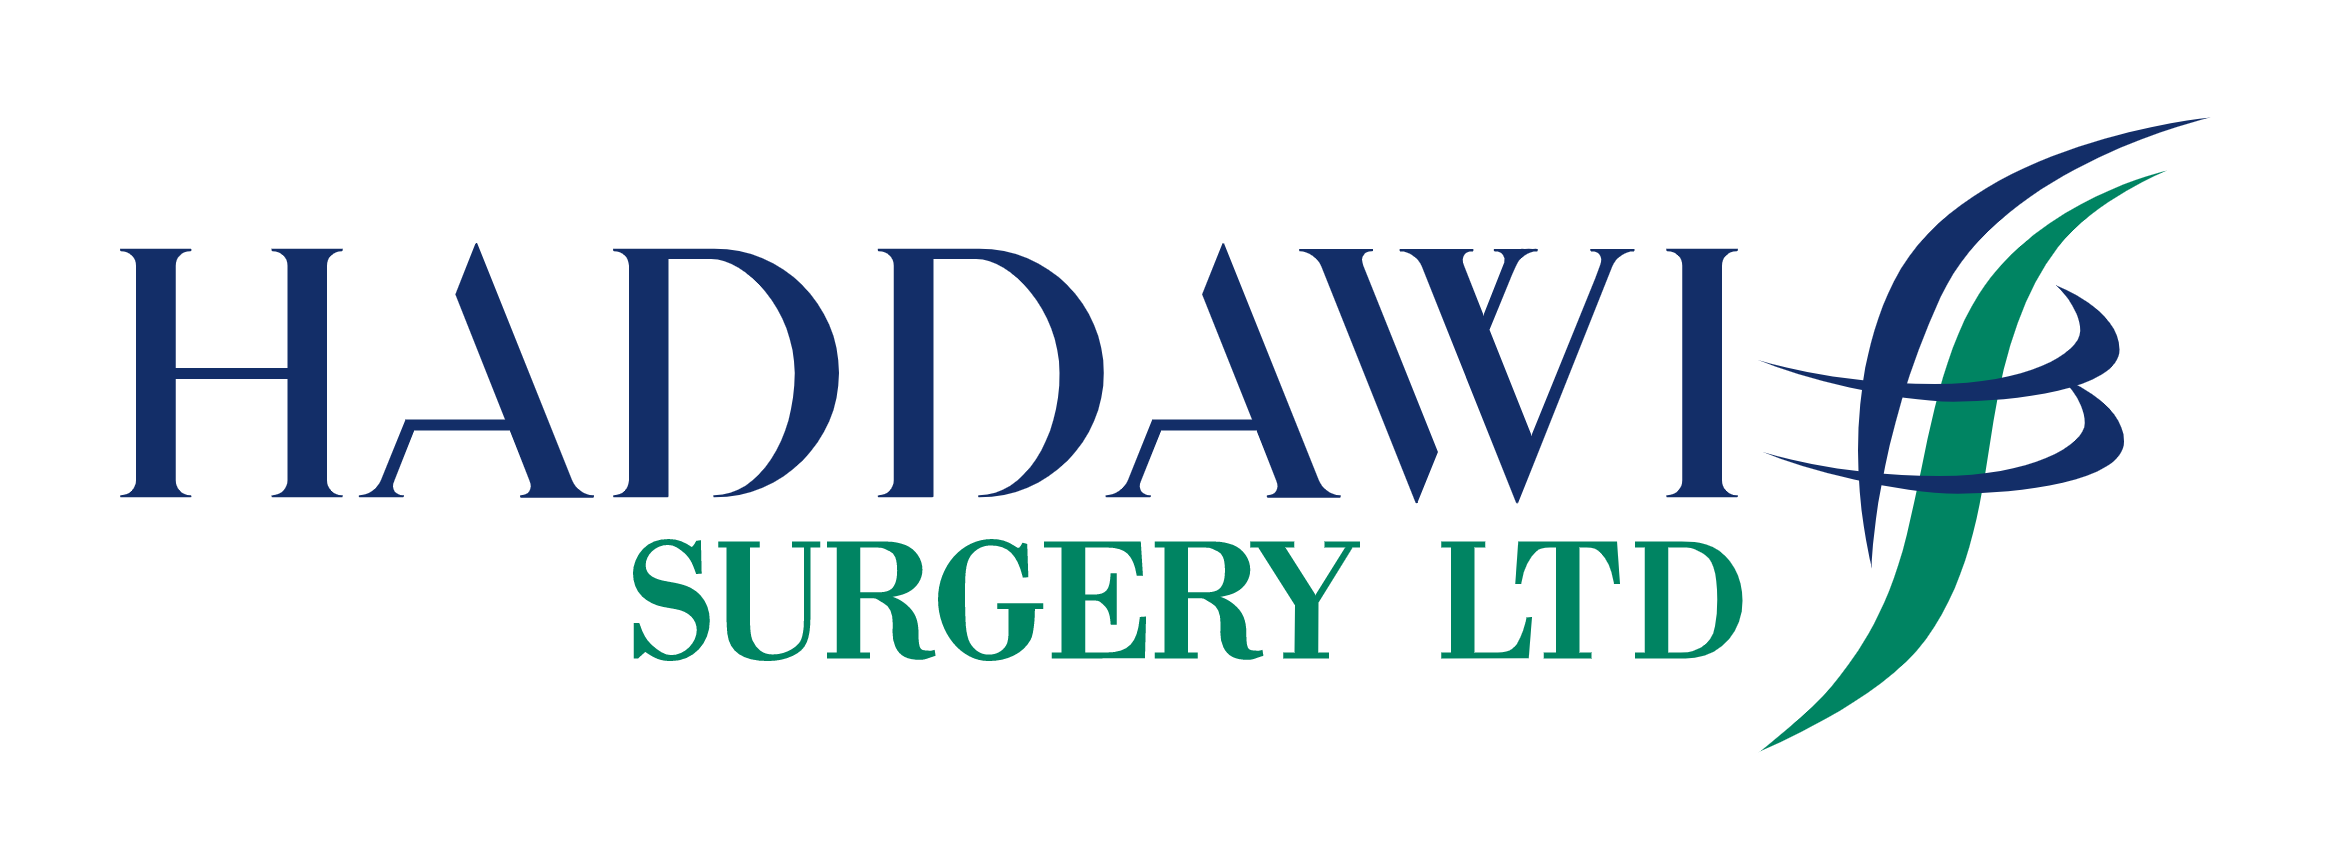 Haddawi Surgery Ltd